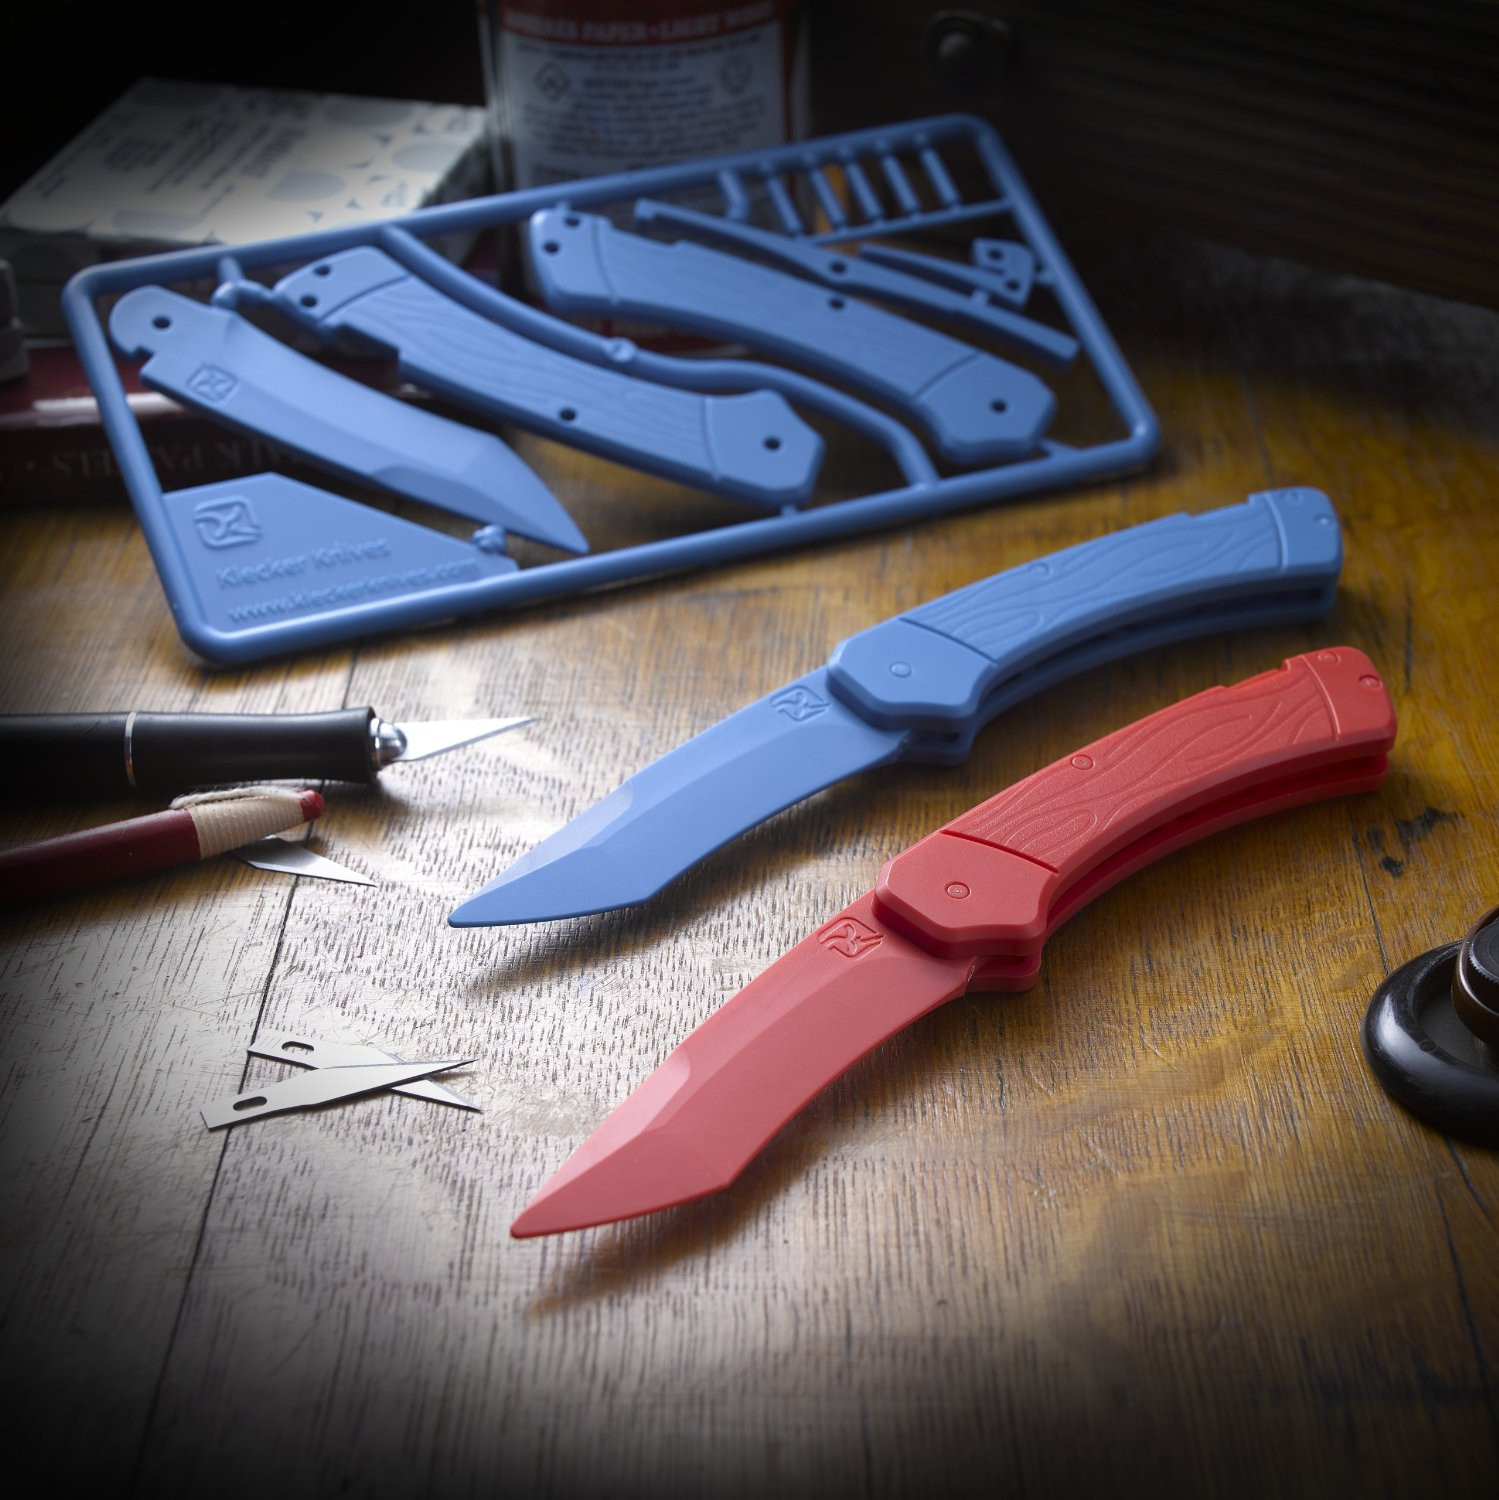 Best ideas about DIY Knife Making Kit
. Save or Pin DIY Trigger Knife Kit NoveltyStreet Now.